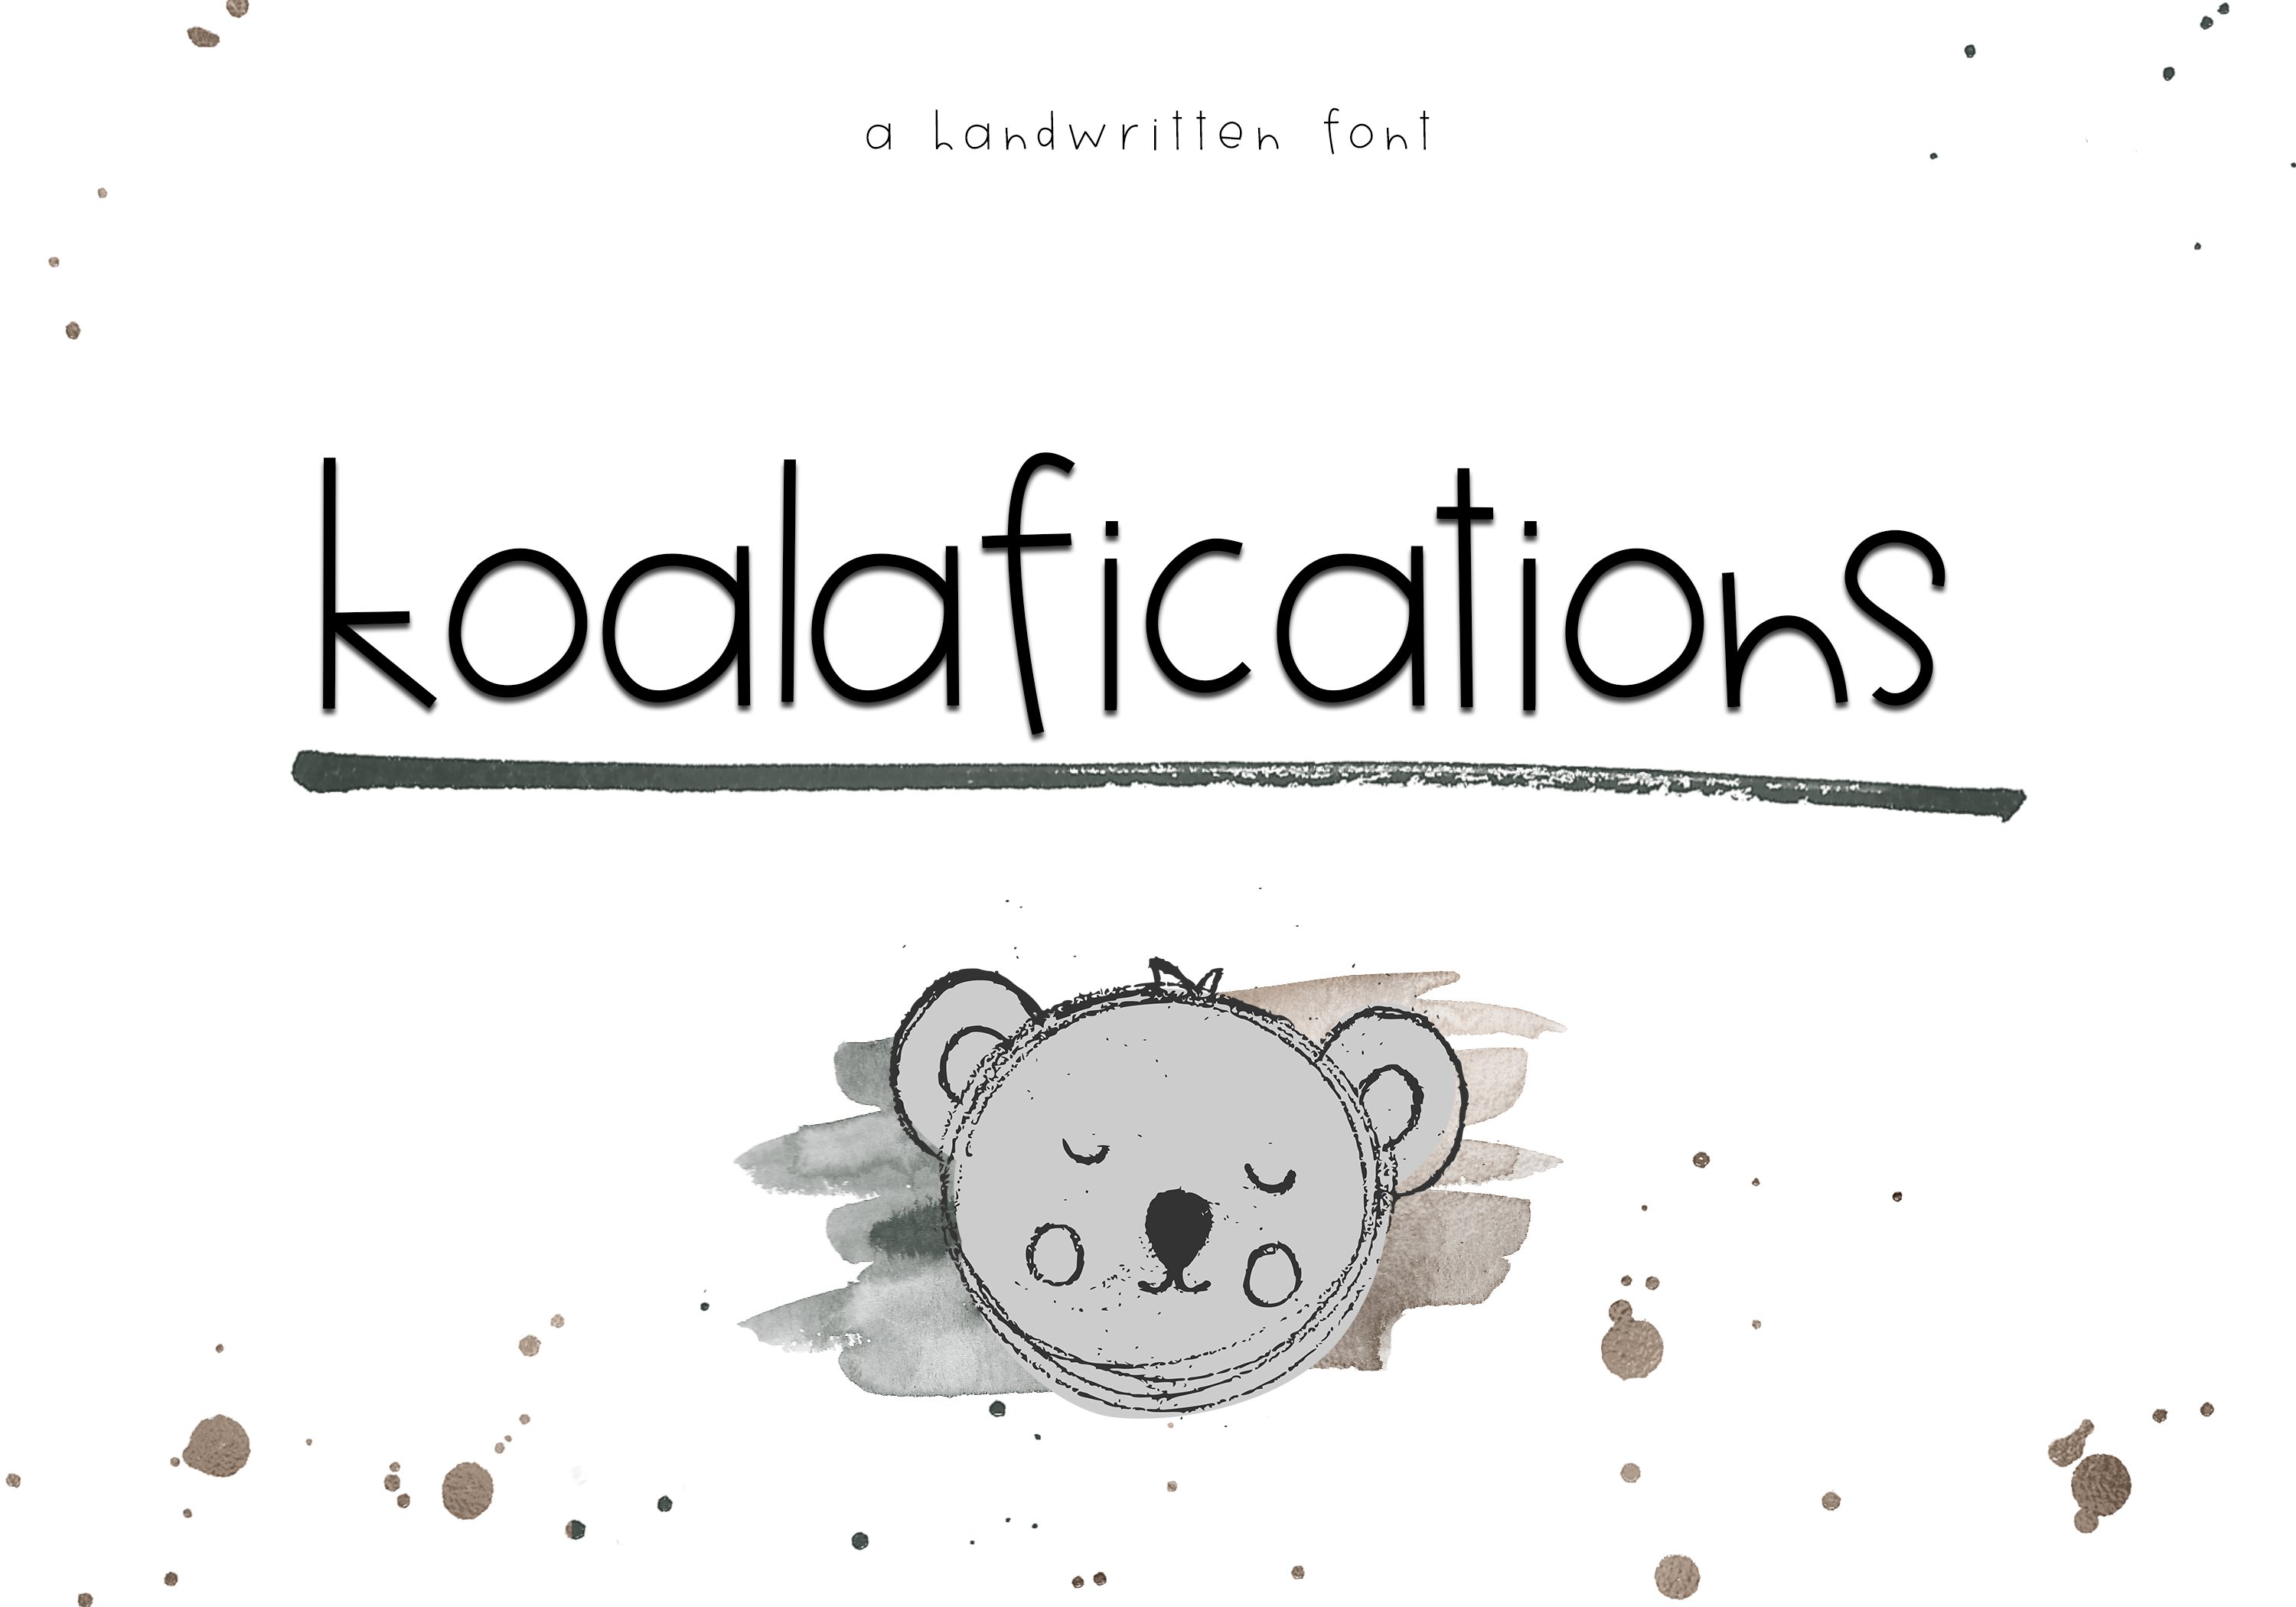 Koalafications - Handwritten Font cover image.